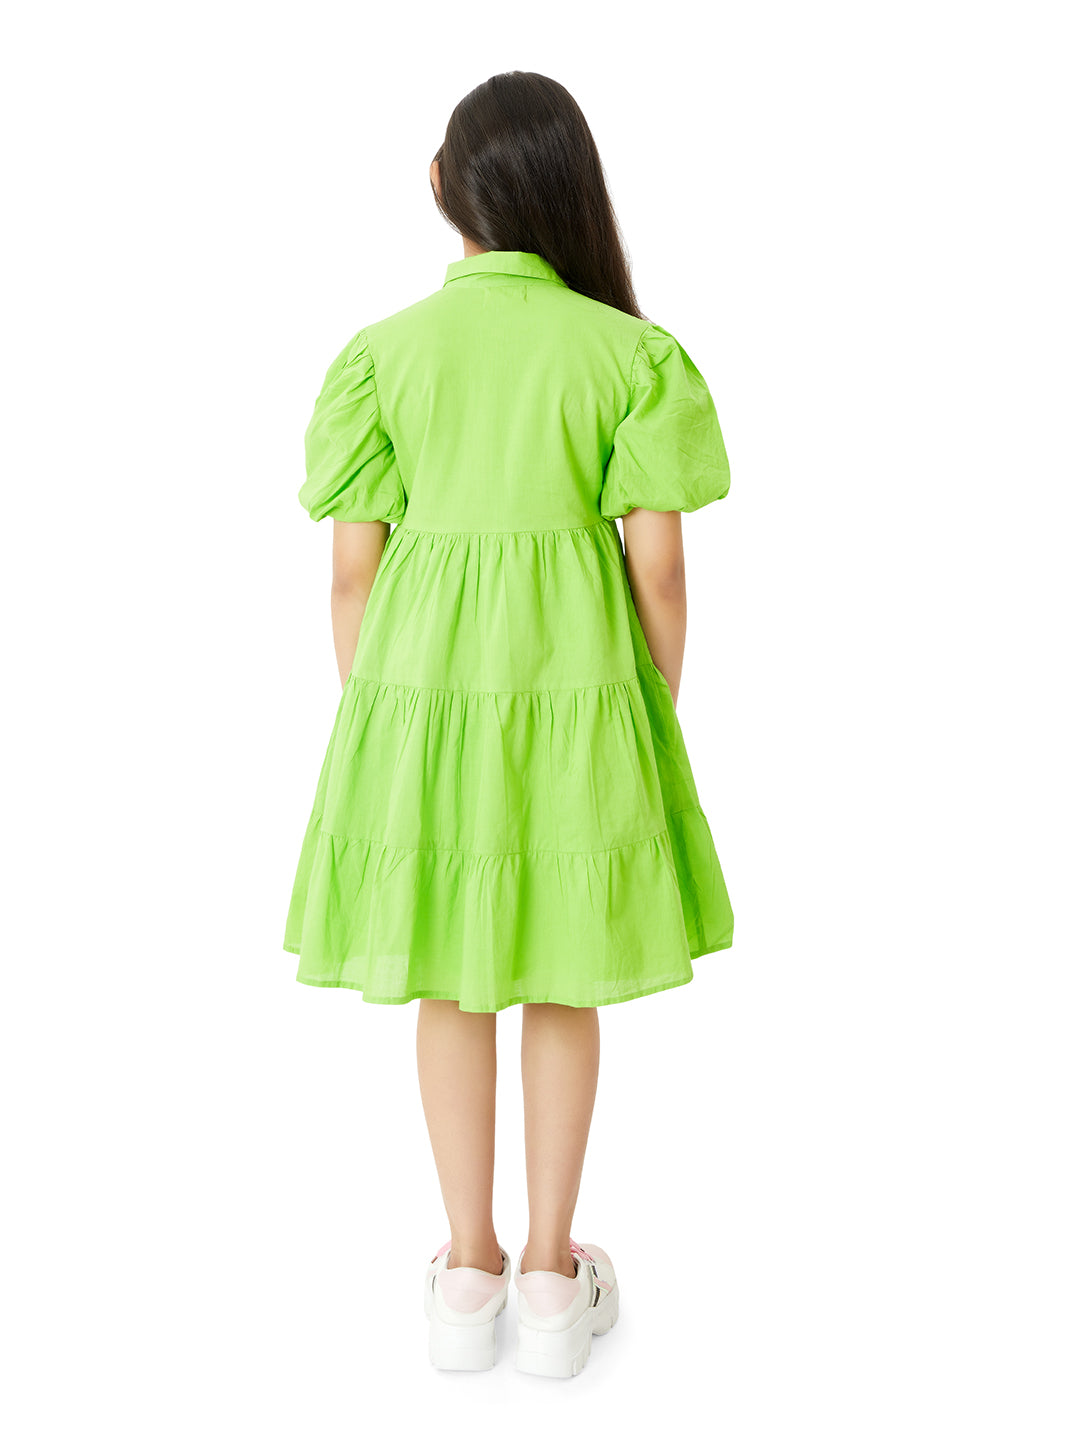 Back View of Girls Green Cotton Dress